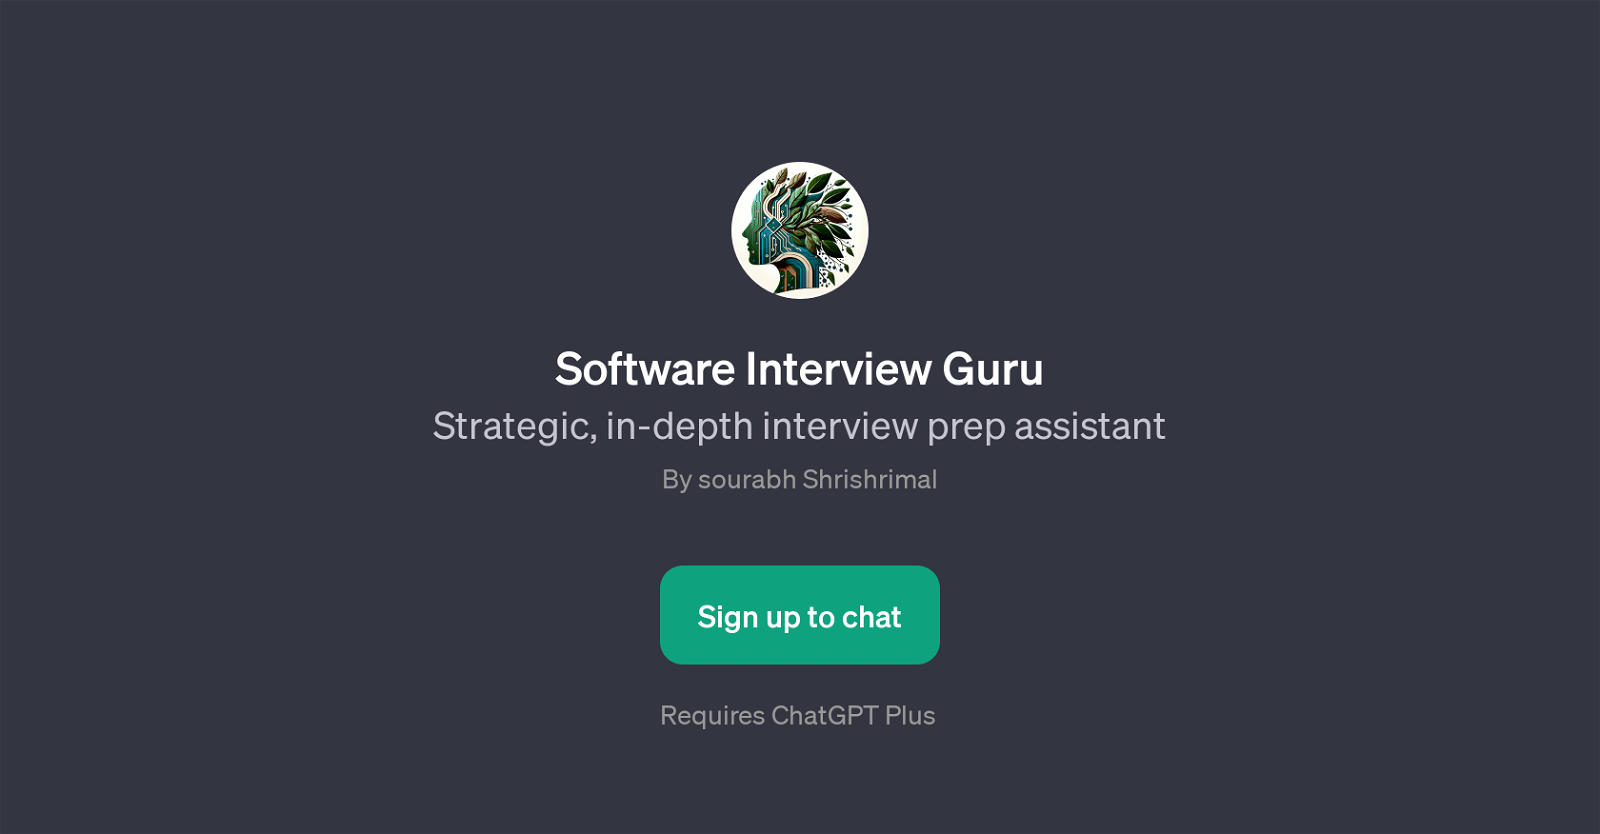 Software Interview Guru website